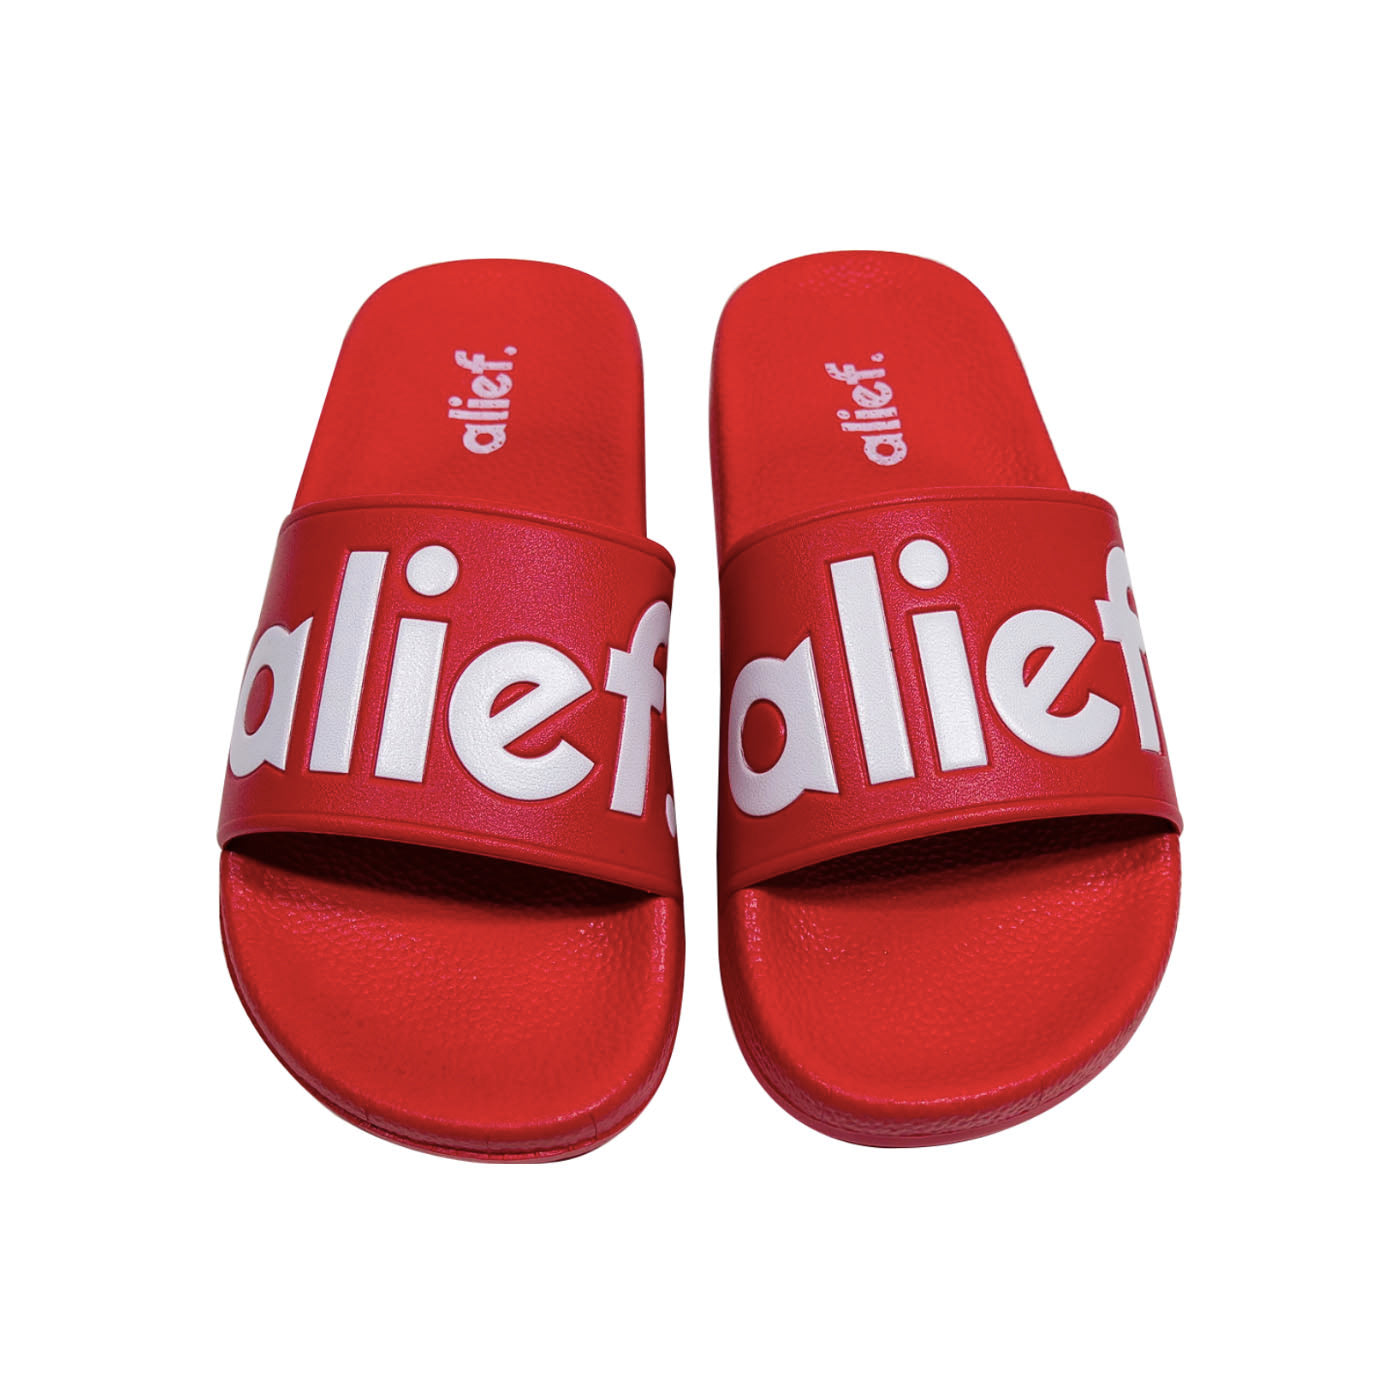 Alief Slides - Red/White